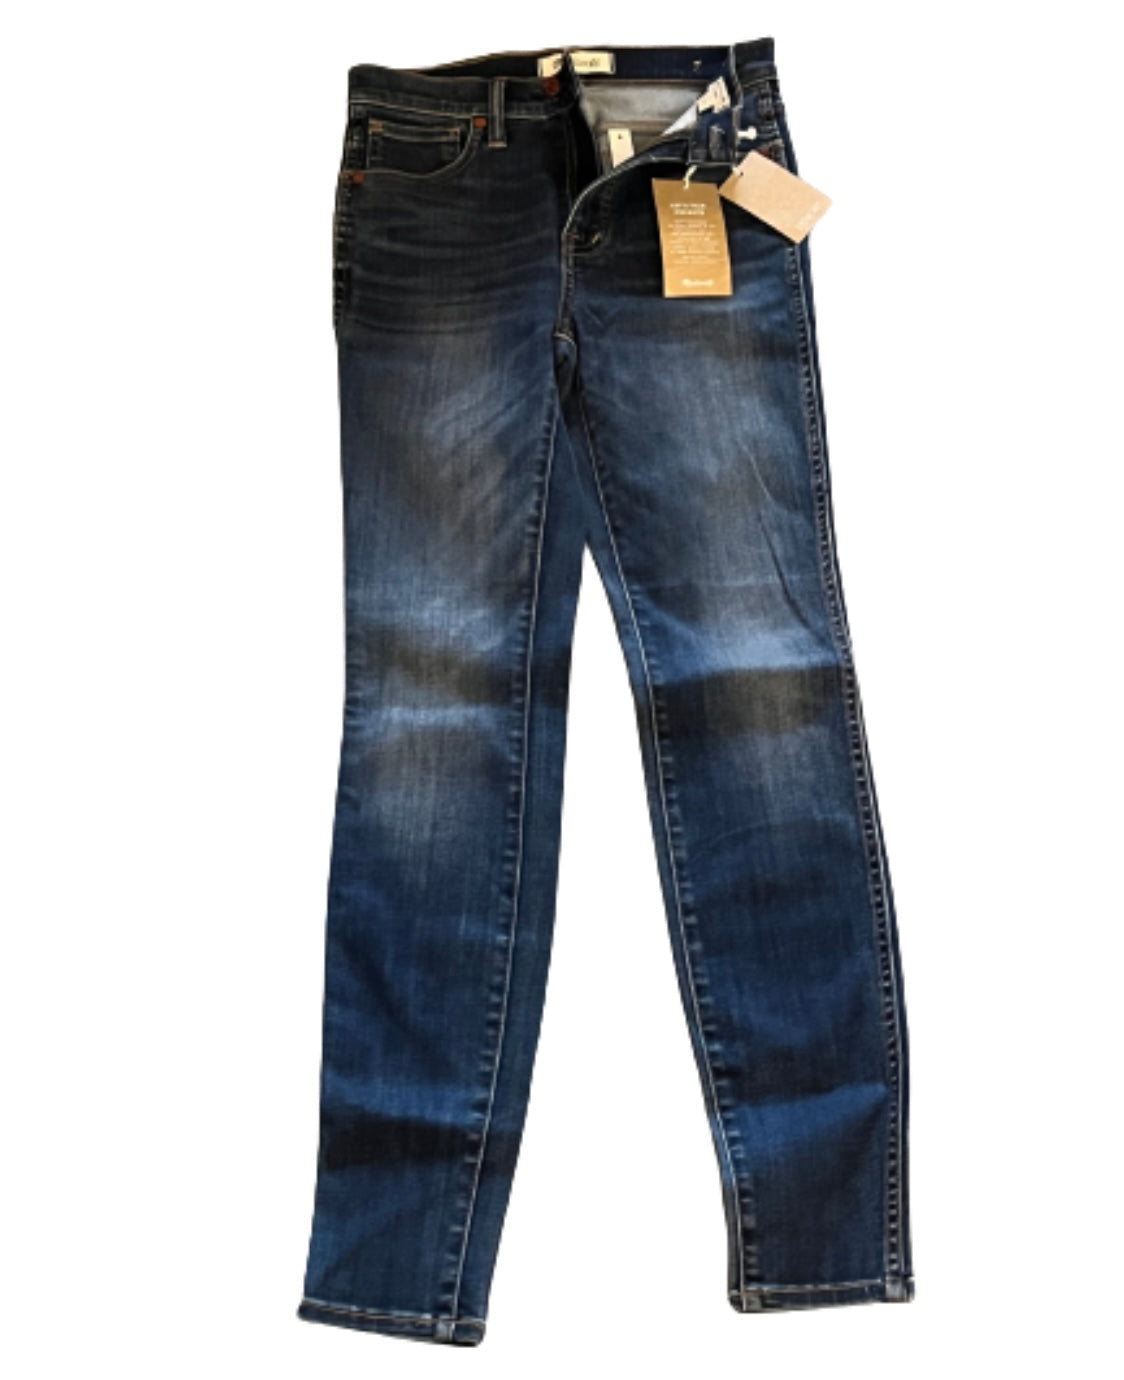 SONS OF ANARCHY: Gemma's Blue Denim Jeans